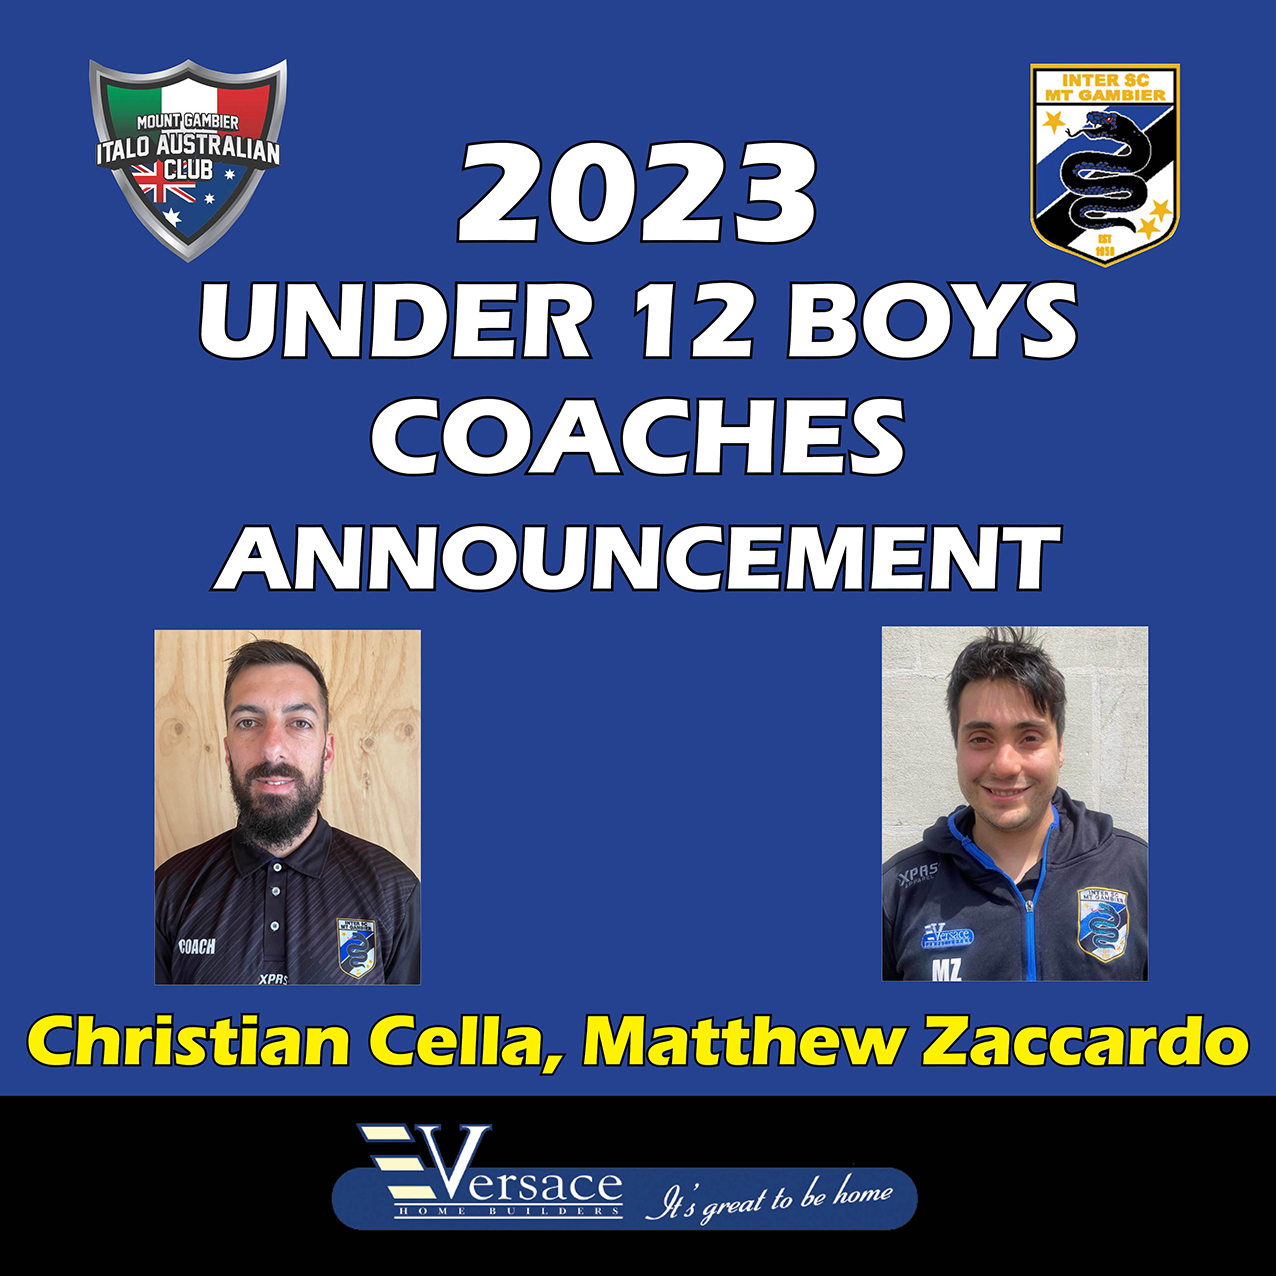 2023 under 12 BOYS COACH